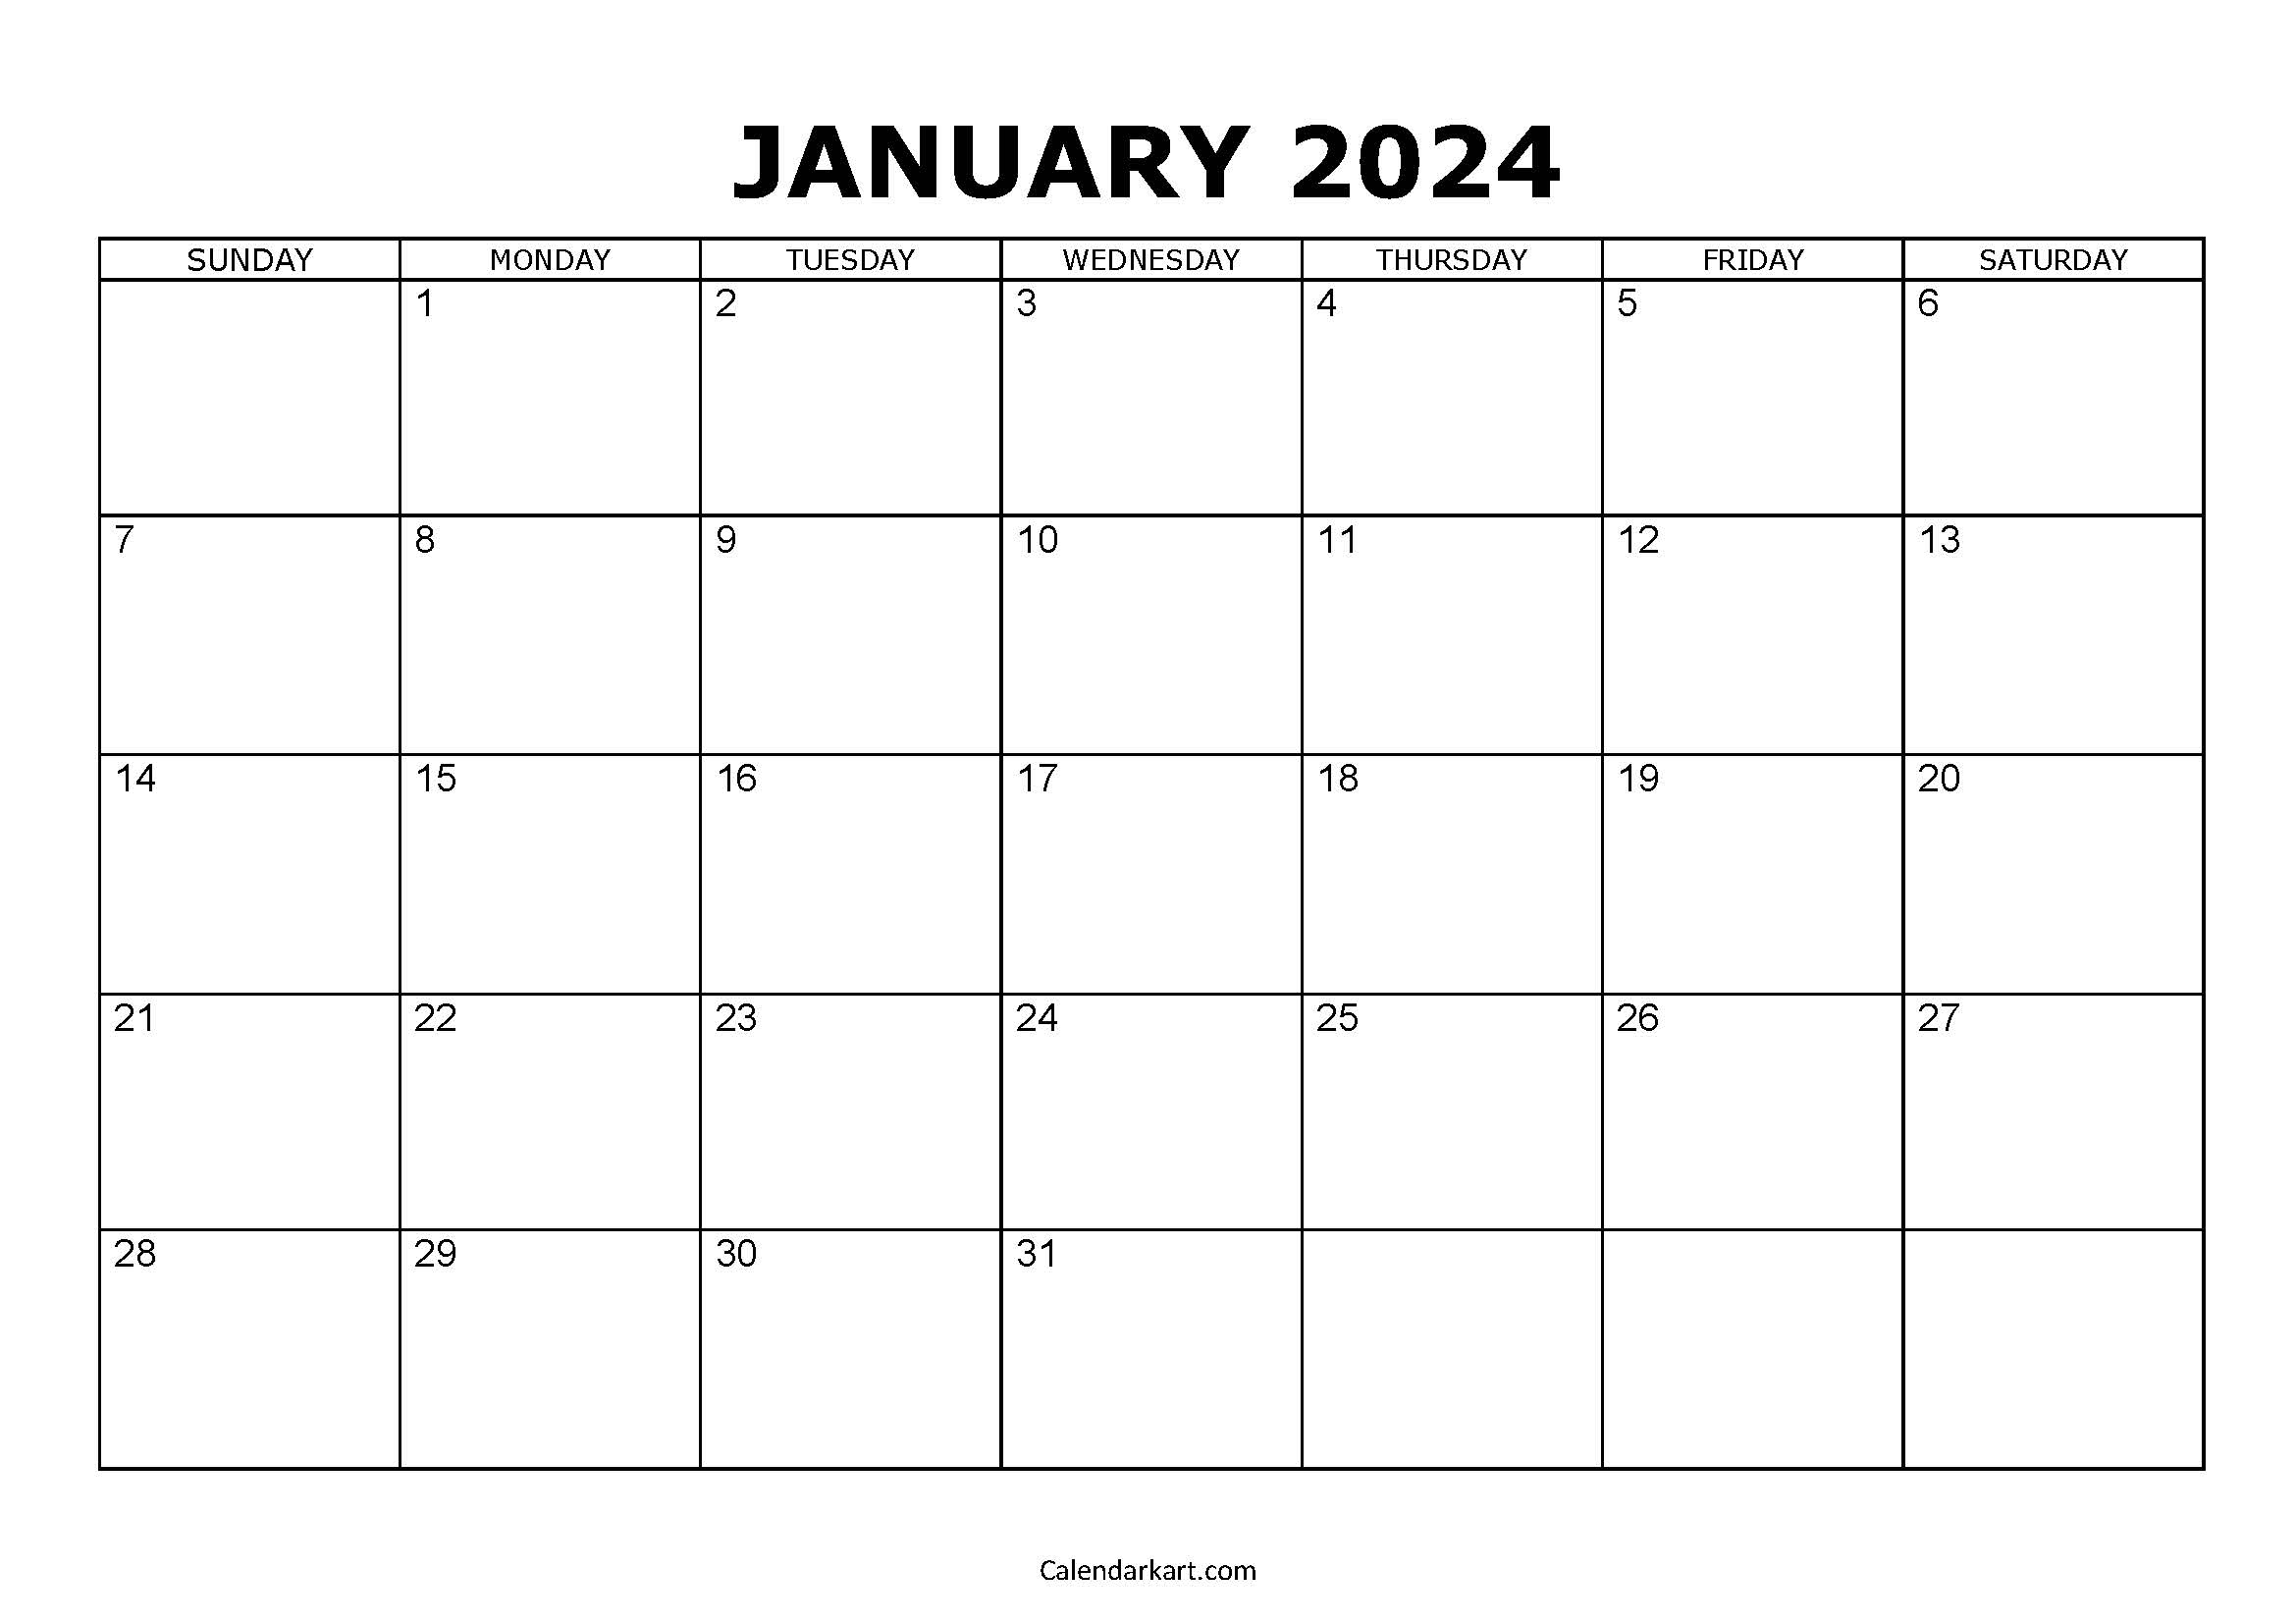 Free Printable January 2024 Calendars - Calendarkart | January 2024 Calendar Printable Free Editable